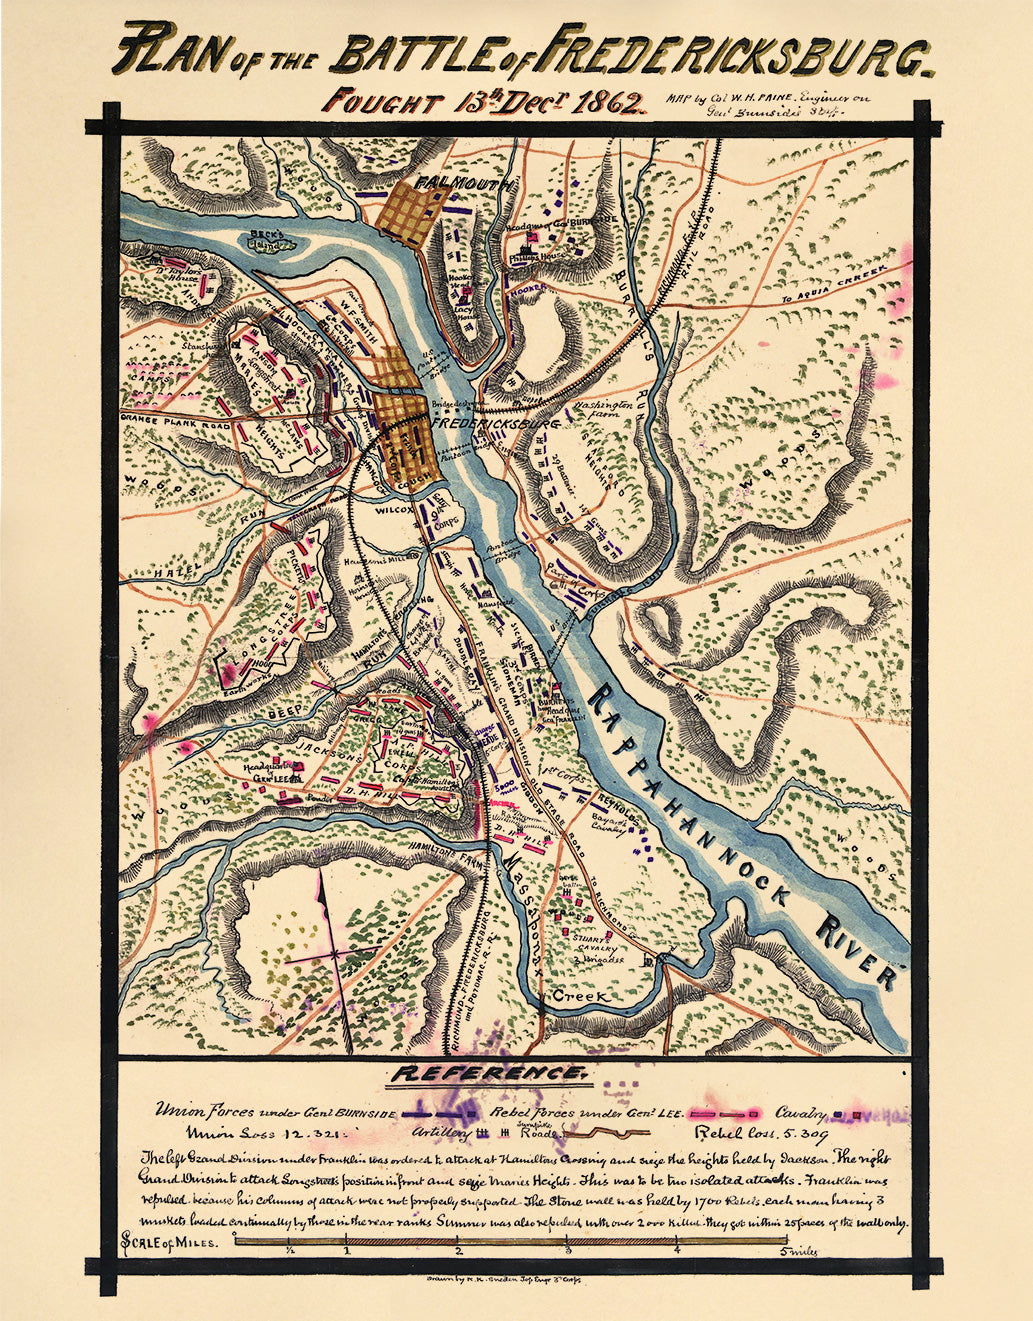 Plan of the Battle of Fredericksburg. Fought 13th Decr. 1862 12-13